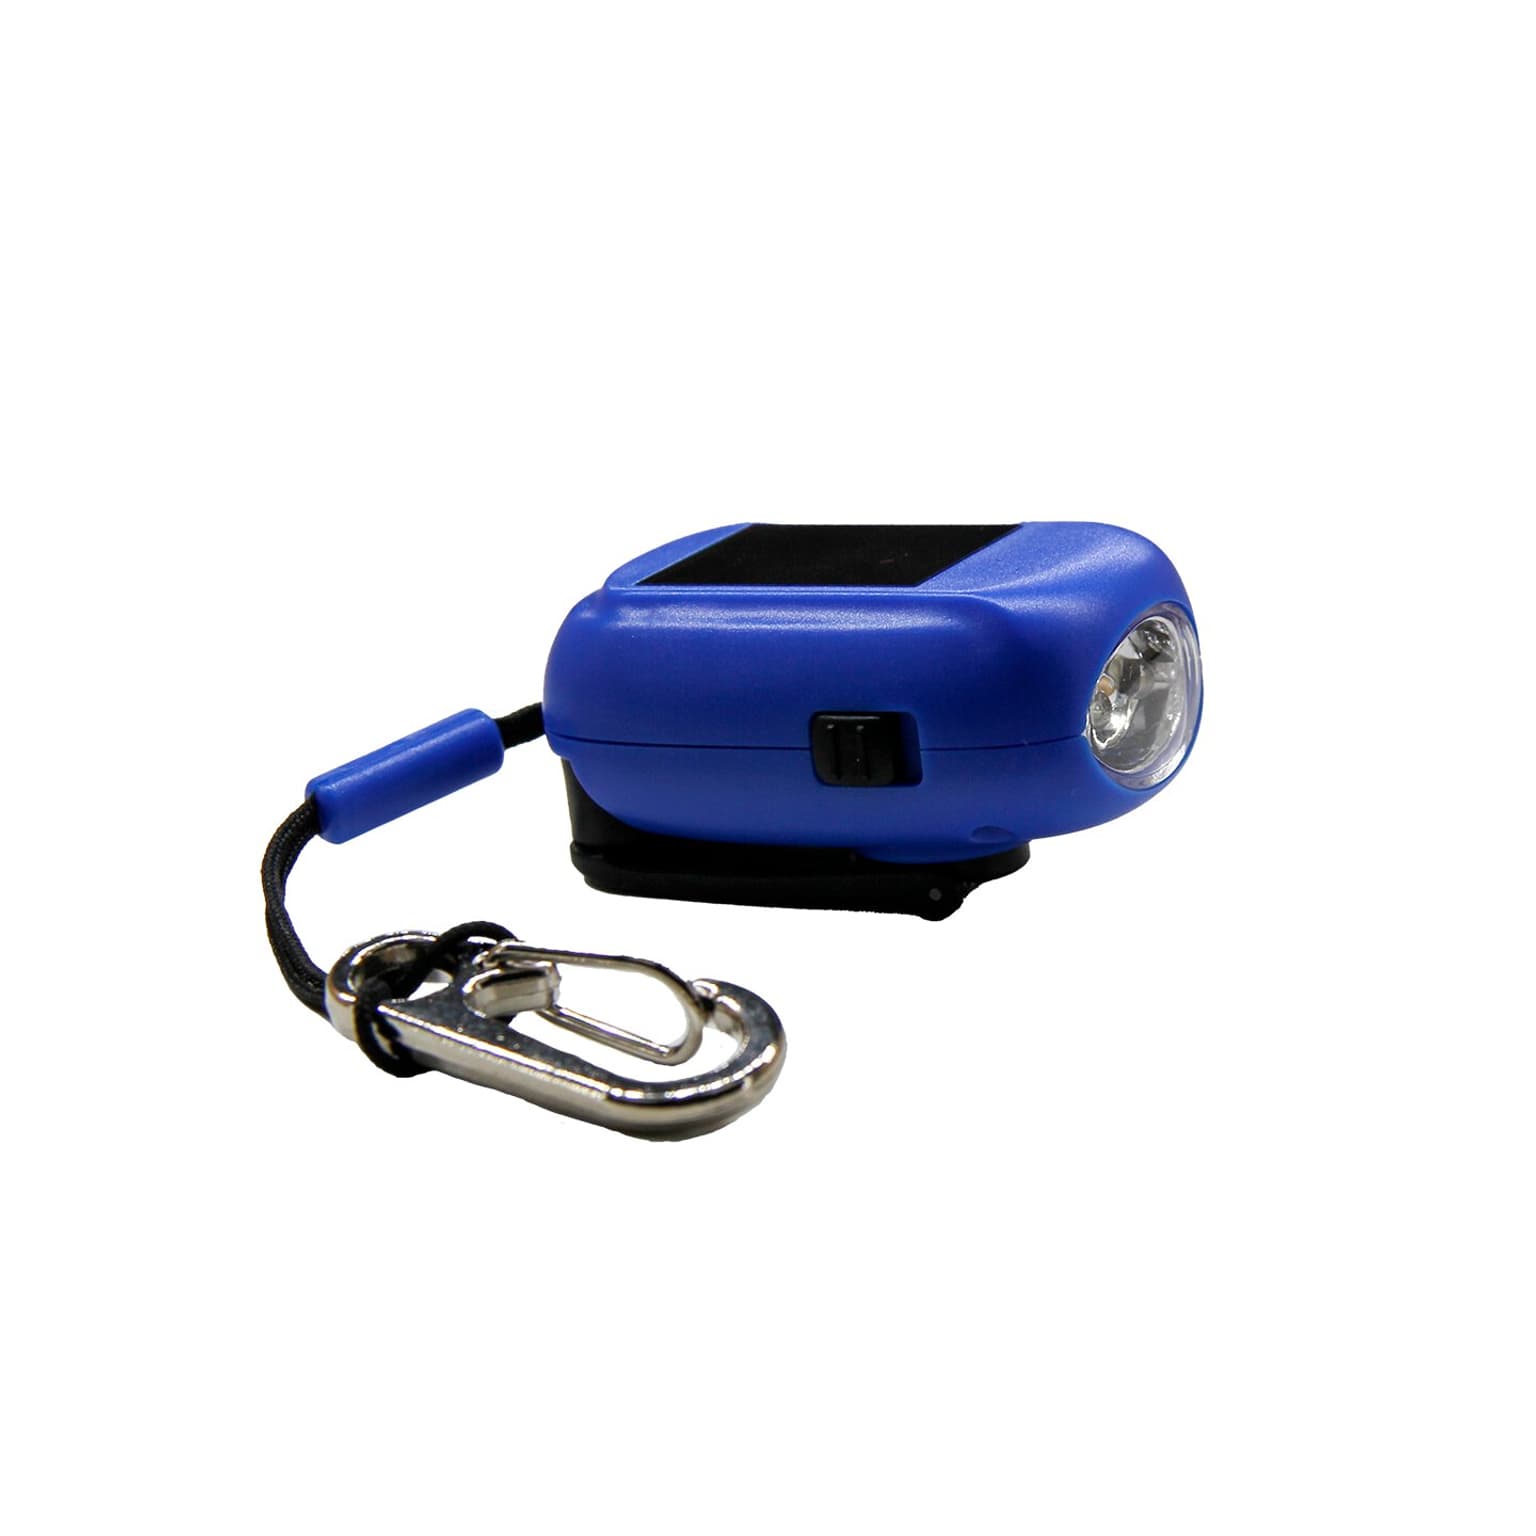 Essential Elements Essential Elements Mini-lampe de poche rec.  mousqueton Lampe de poche bleu 4